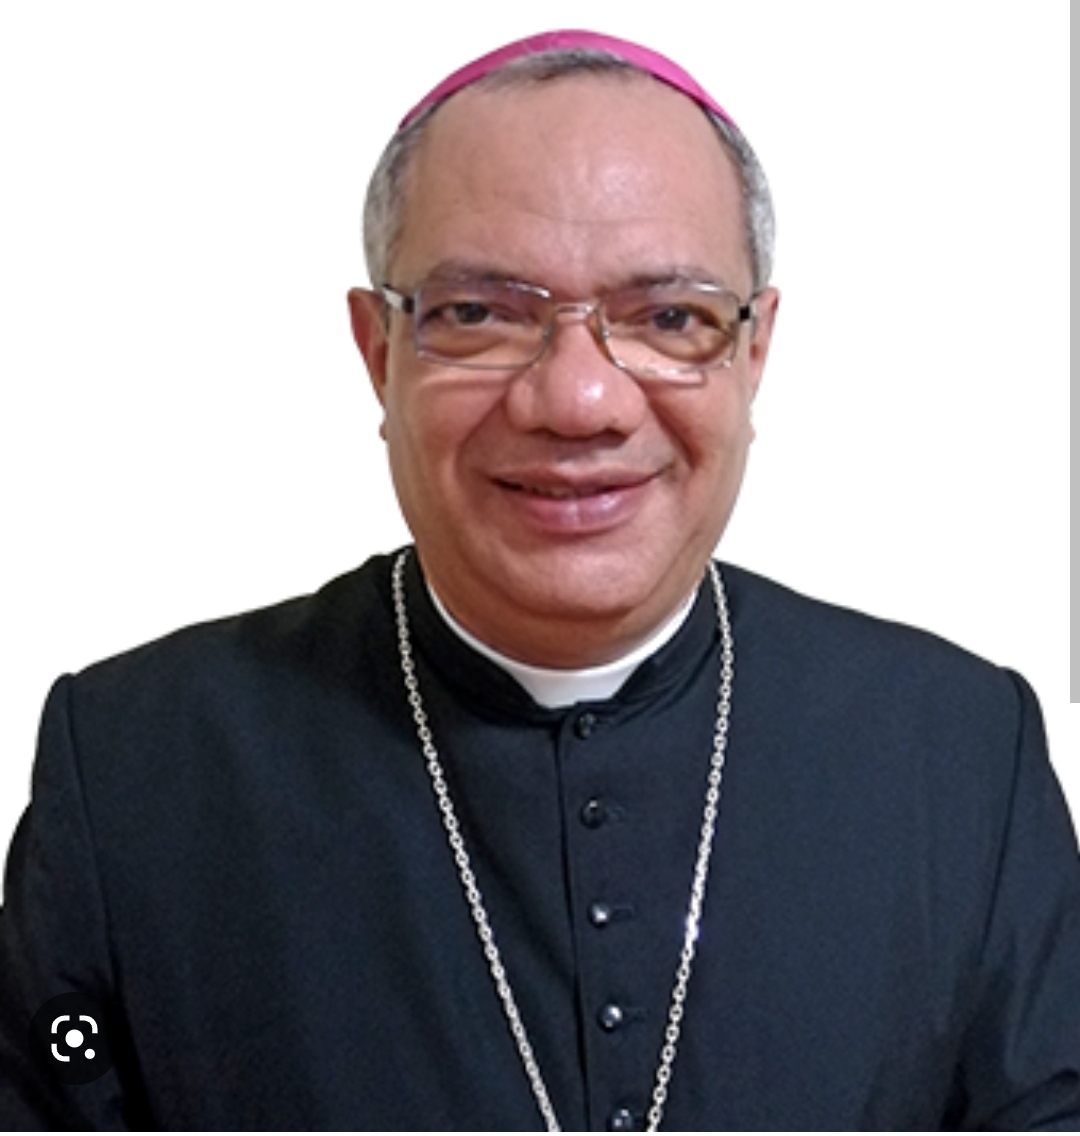 Hoy inicia su Ministerio Pastoral como VII Arzobispo de Mérida Mons. Helizandro Terán